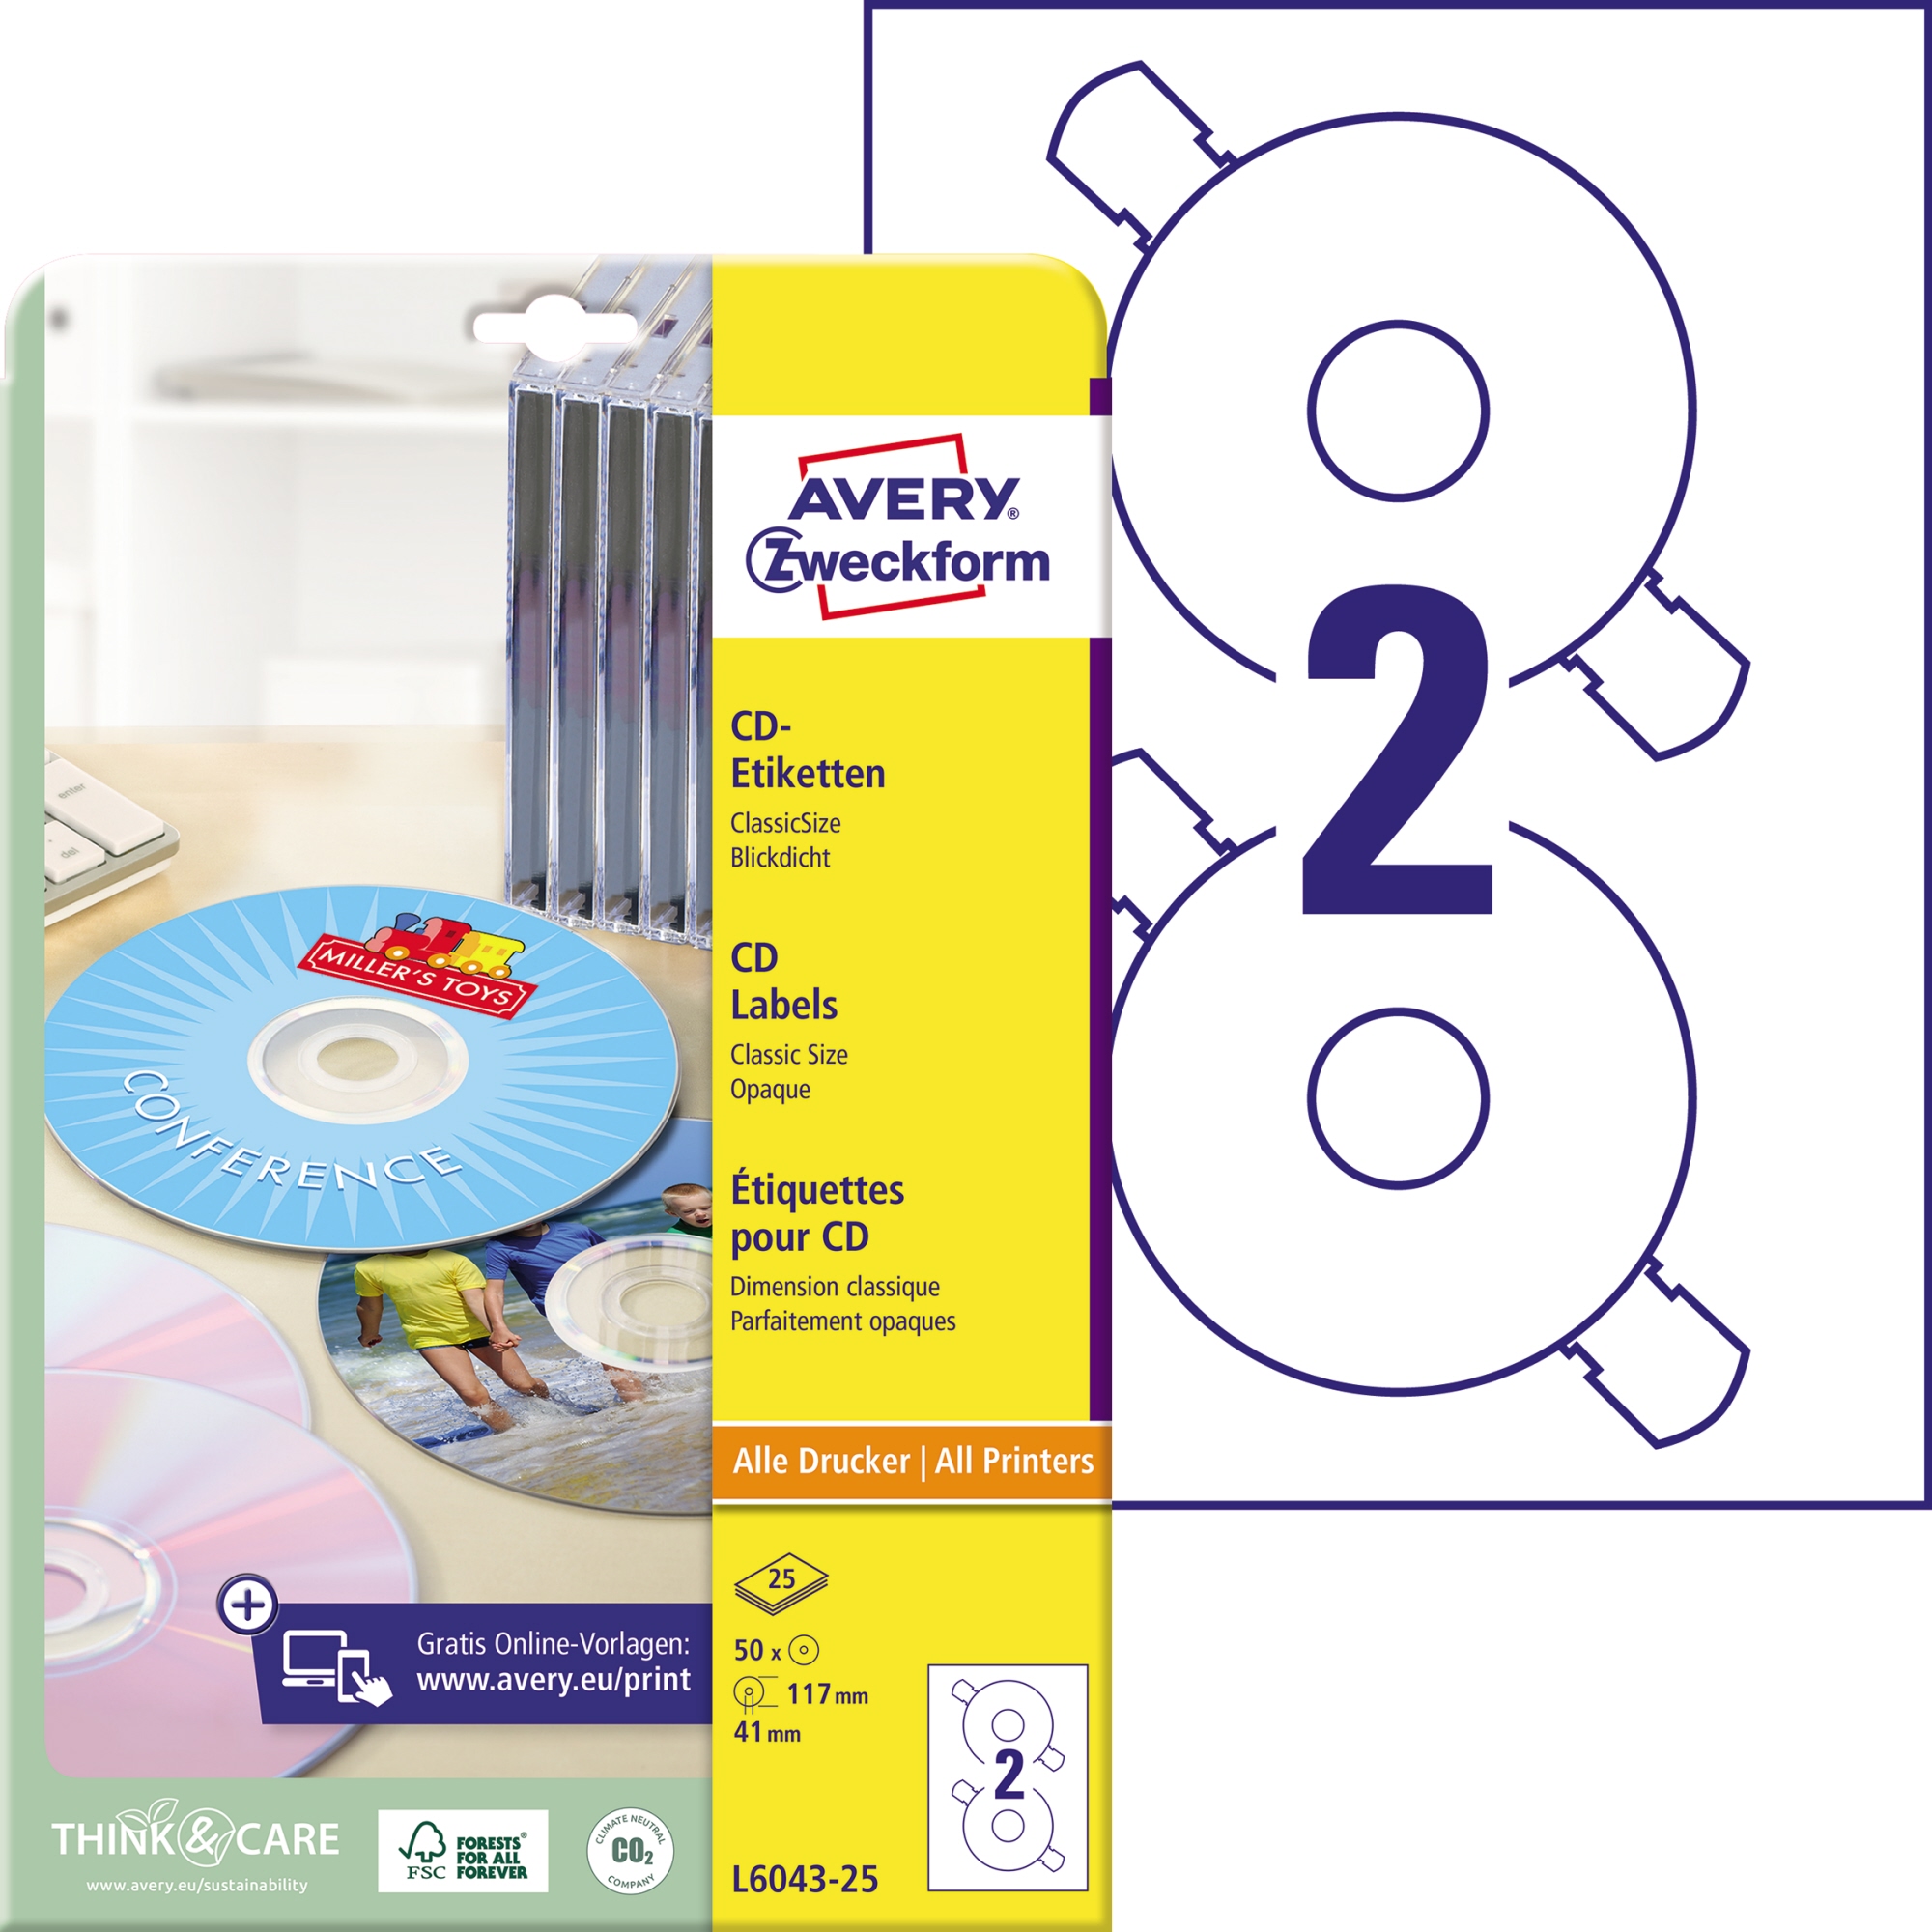 Avery Zweckform CD/DVD Etikett, weiß, 25 Bl./Pack.